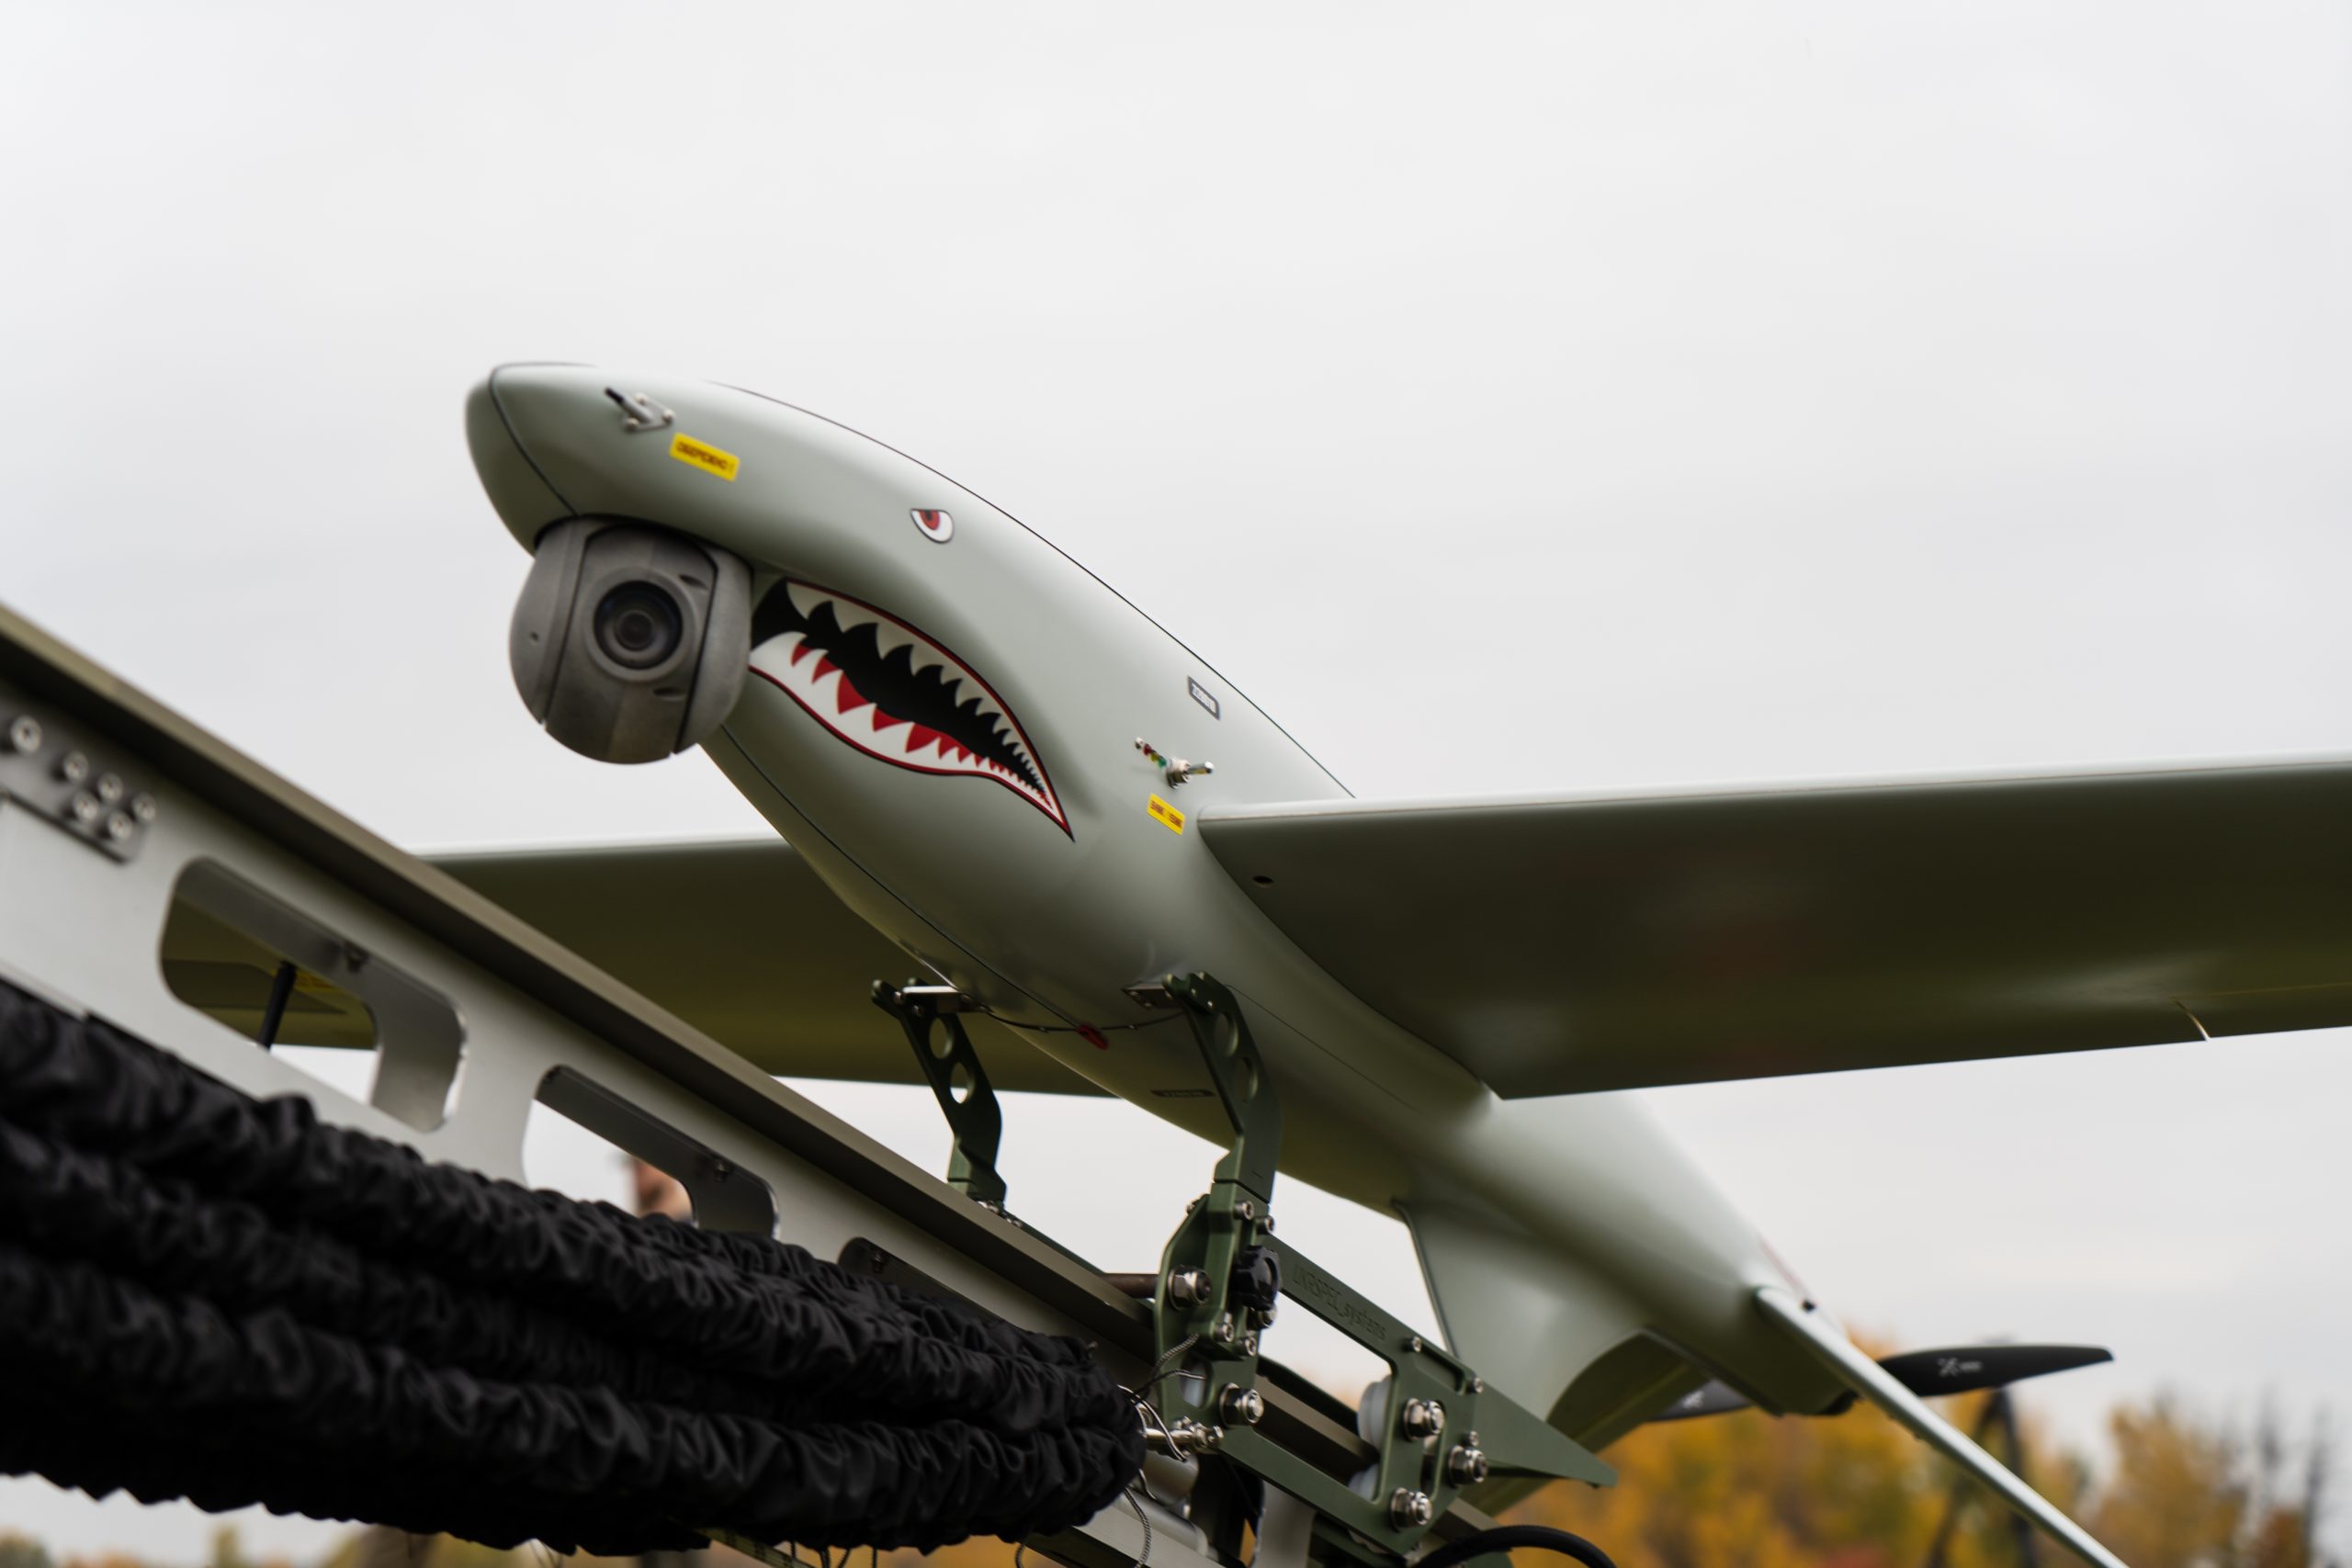 Ukrspecsystems unveiled its new SHARK UAV - Militarnyi